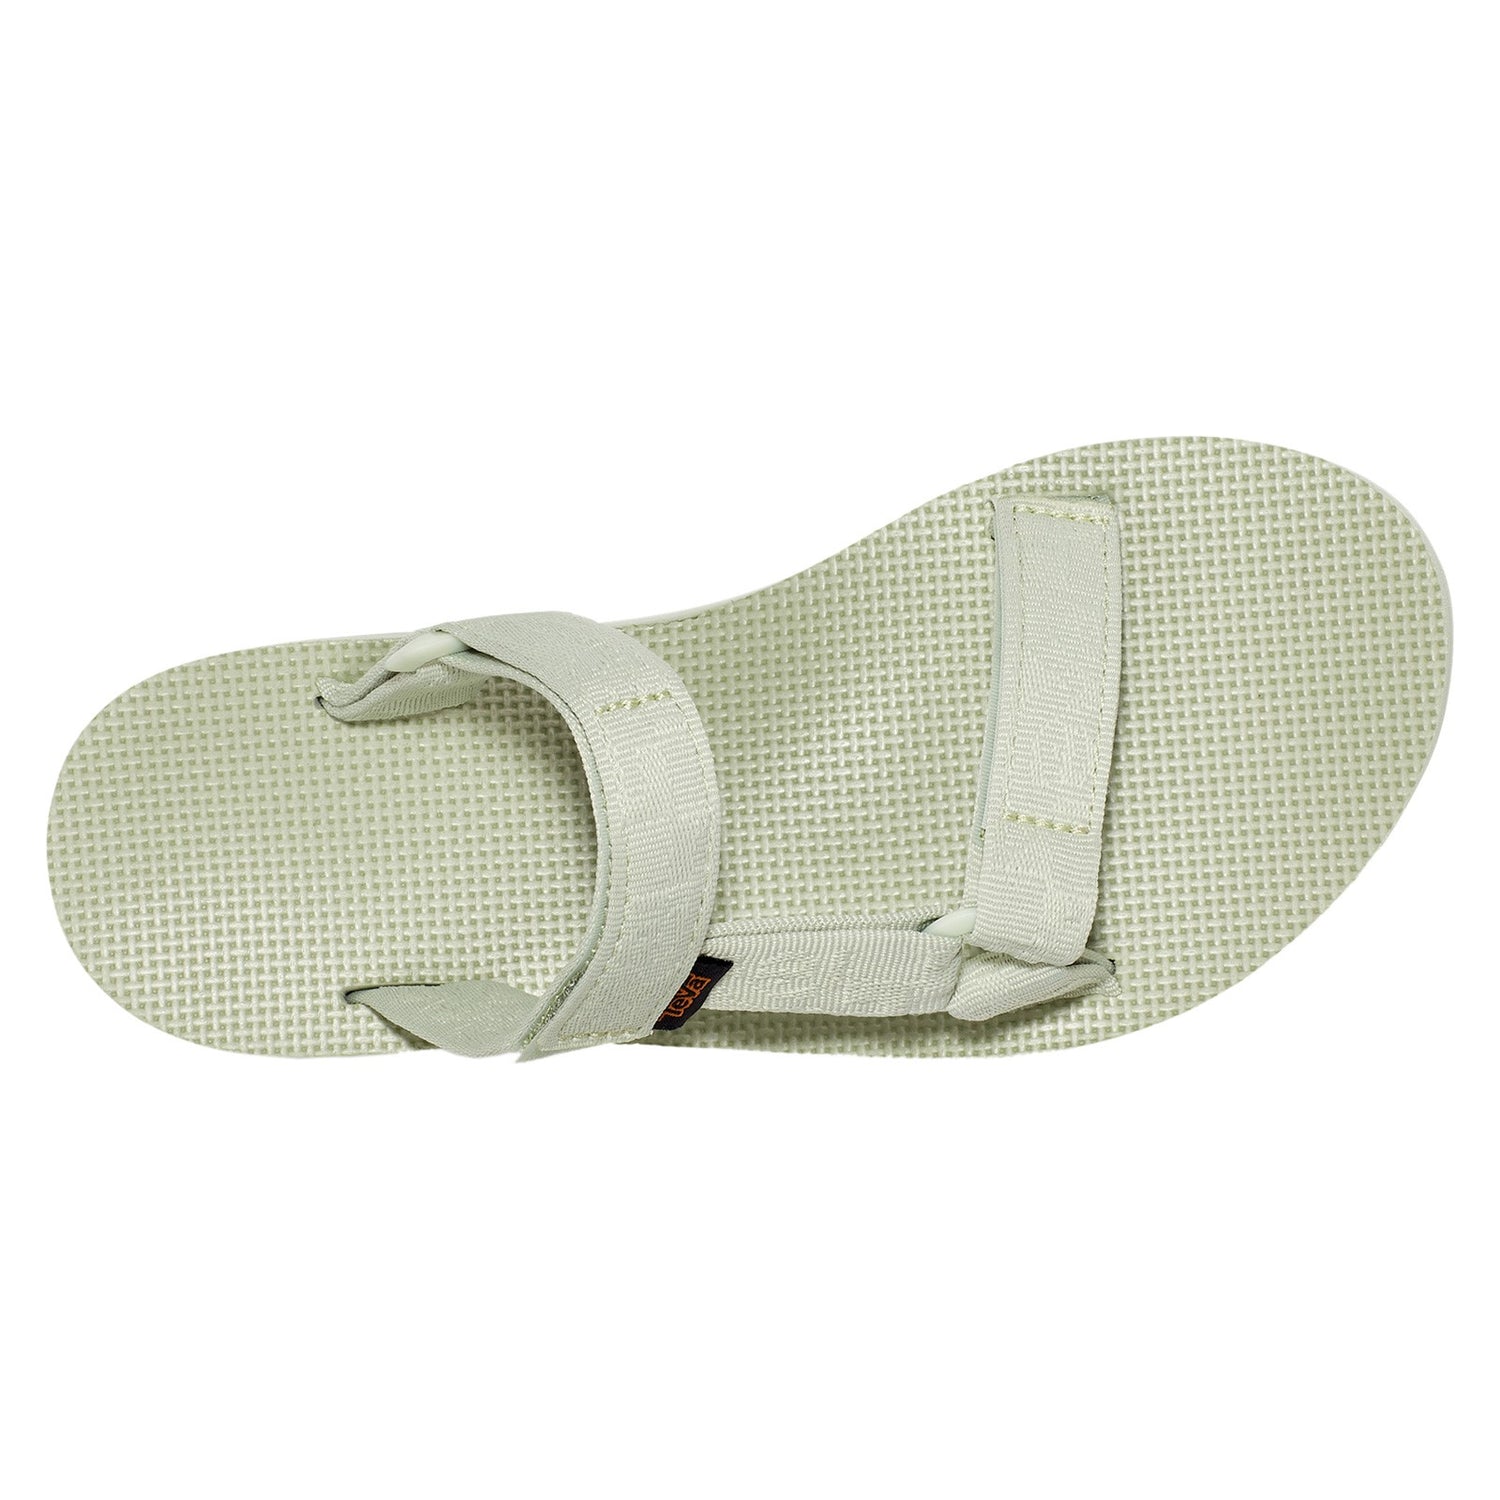 Peltz Shoes  Women's Teva Universal Slide Sandal BOK CHOY 1124230-TTBCH